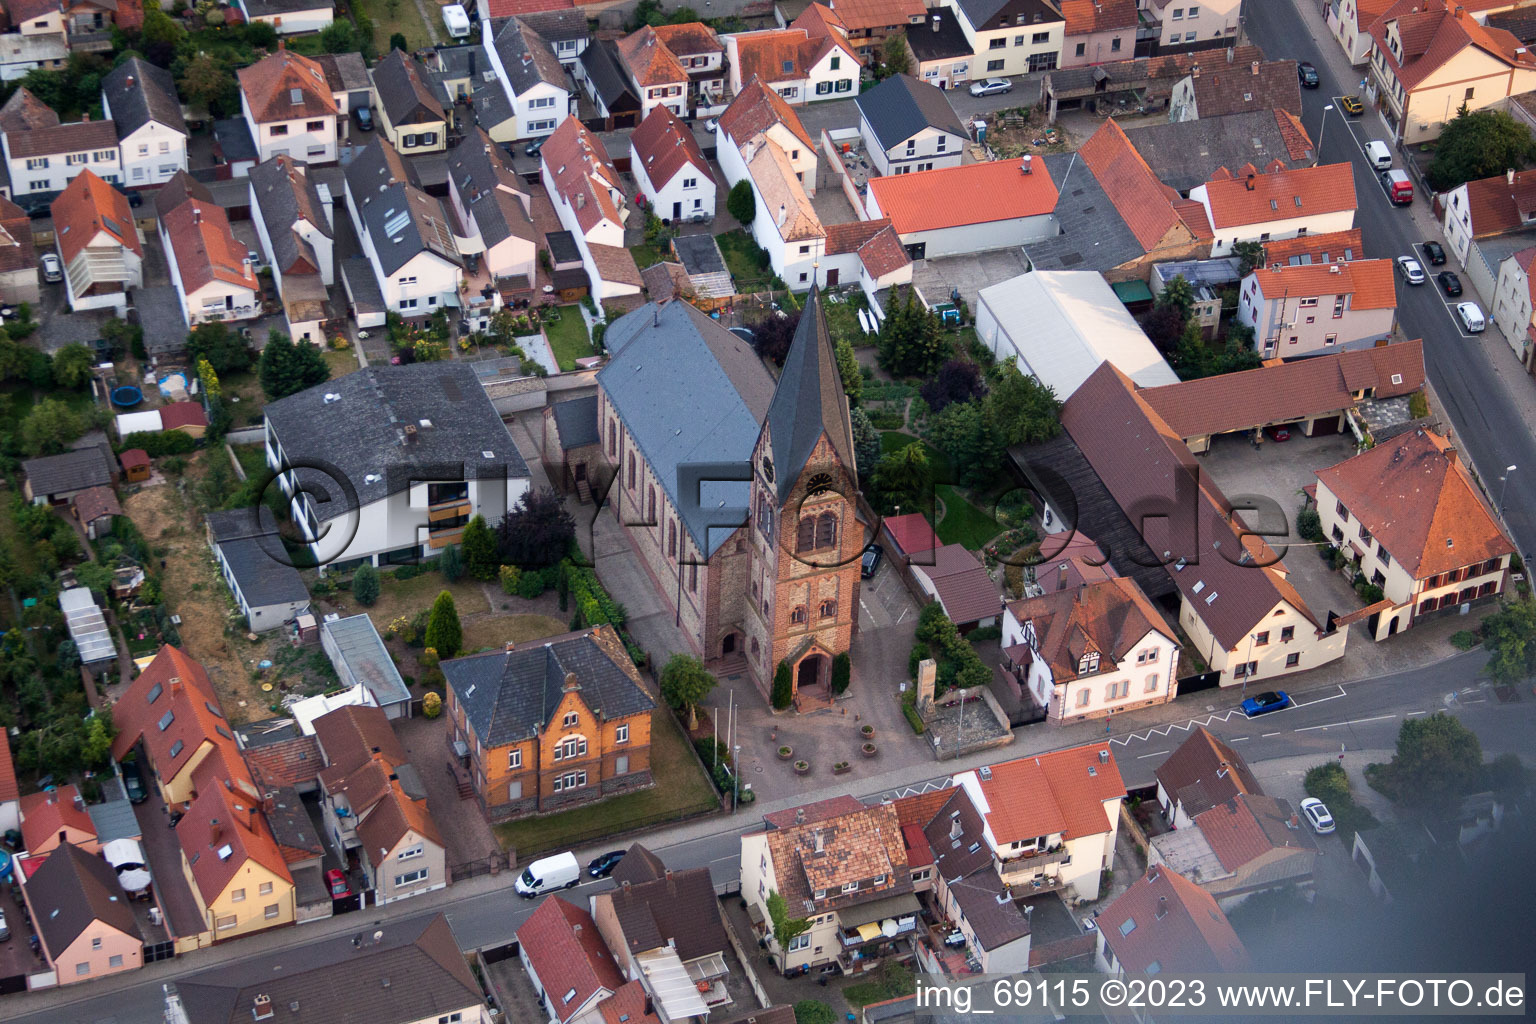 St. Lawrence in the district Bobenheim in Bobenheim-Roxheim in the state Rhineland-Palatinate, Germany